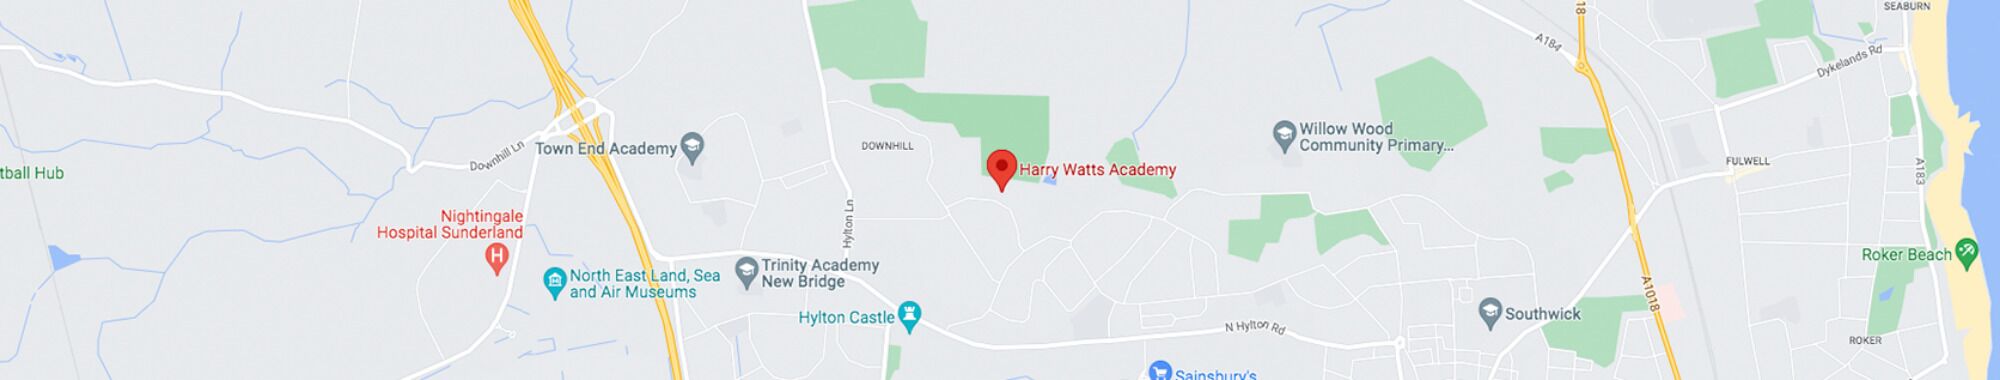 Harry Watts Academy